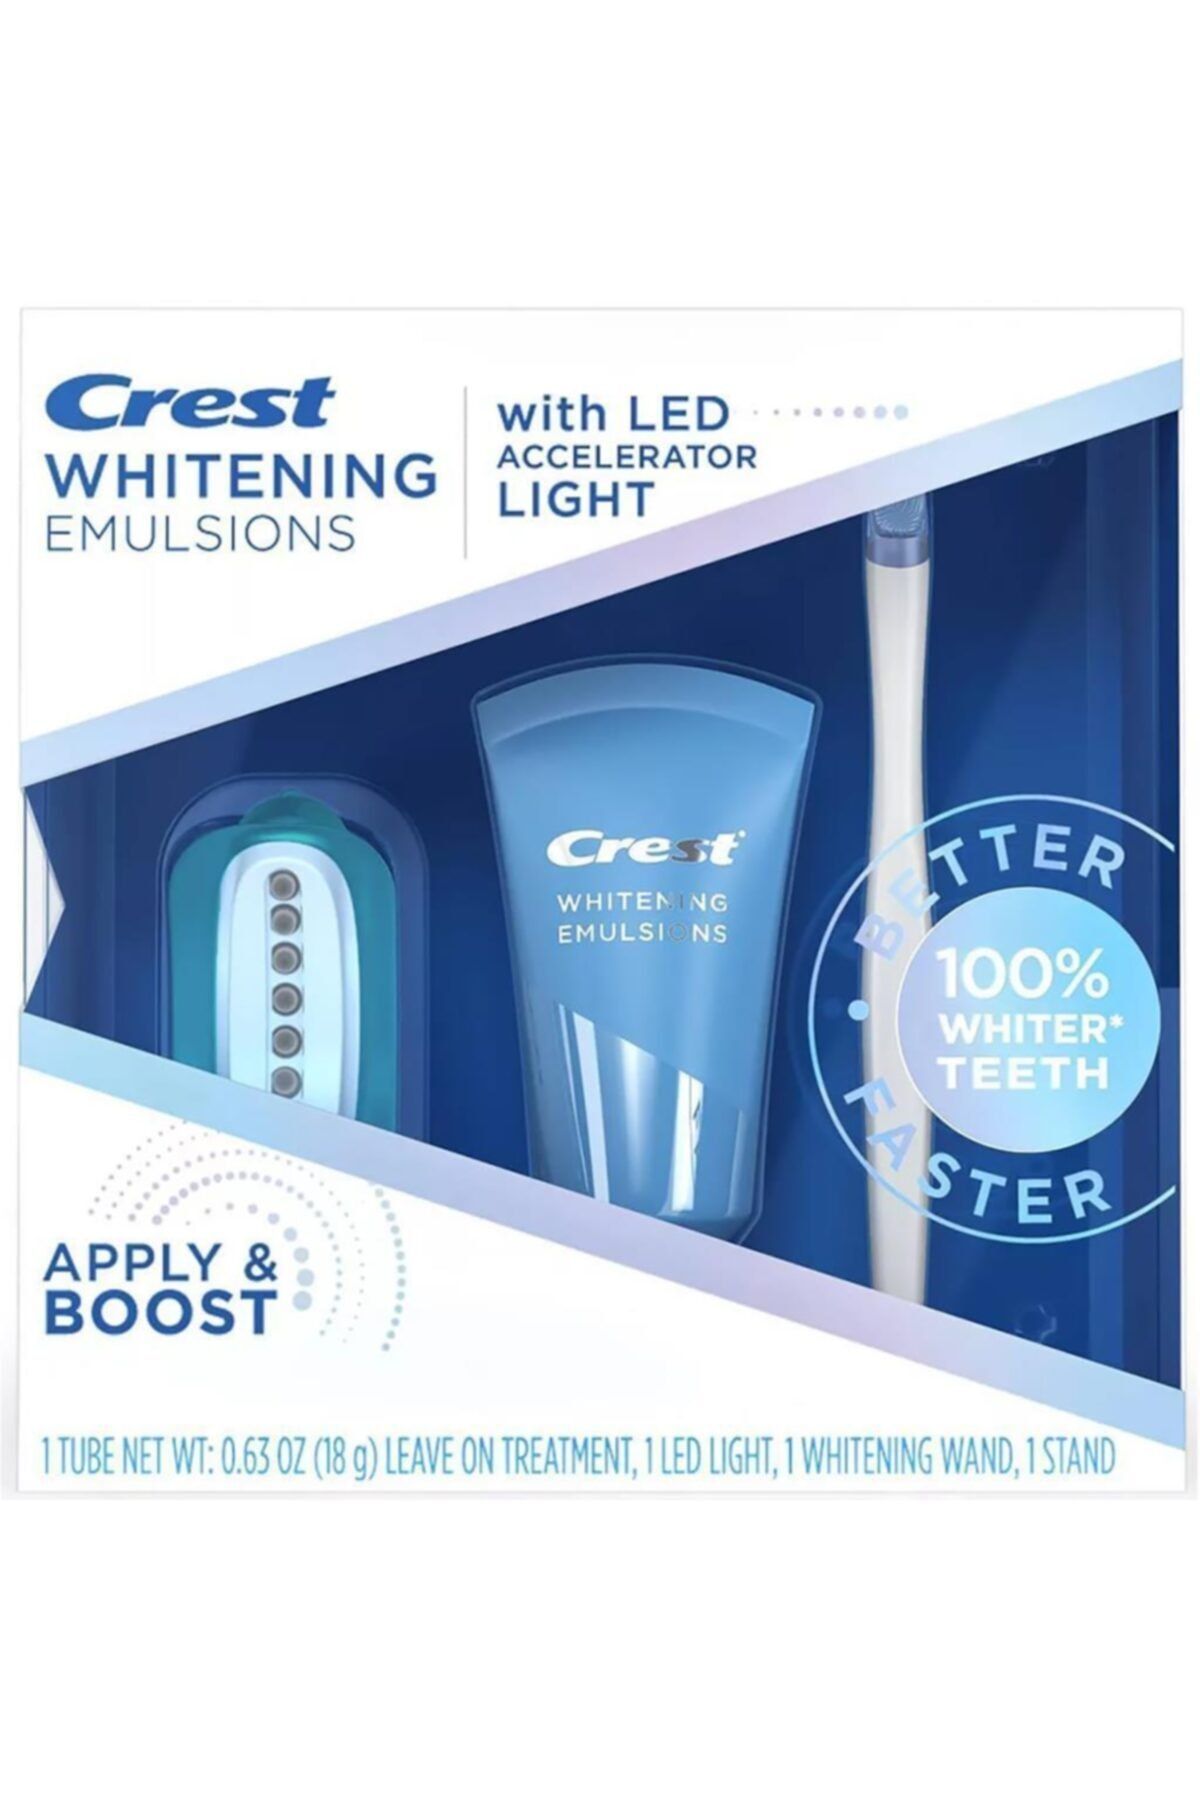 CREST Whitening Emulsions With Led Accelerator Light